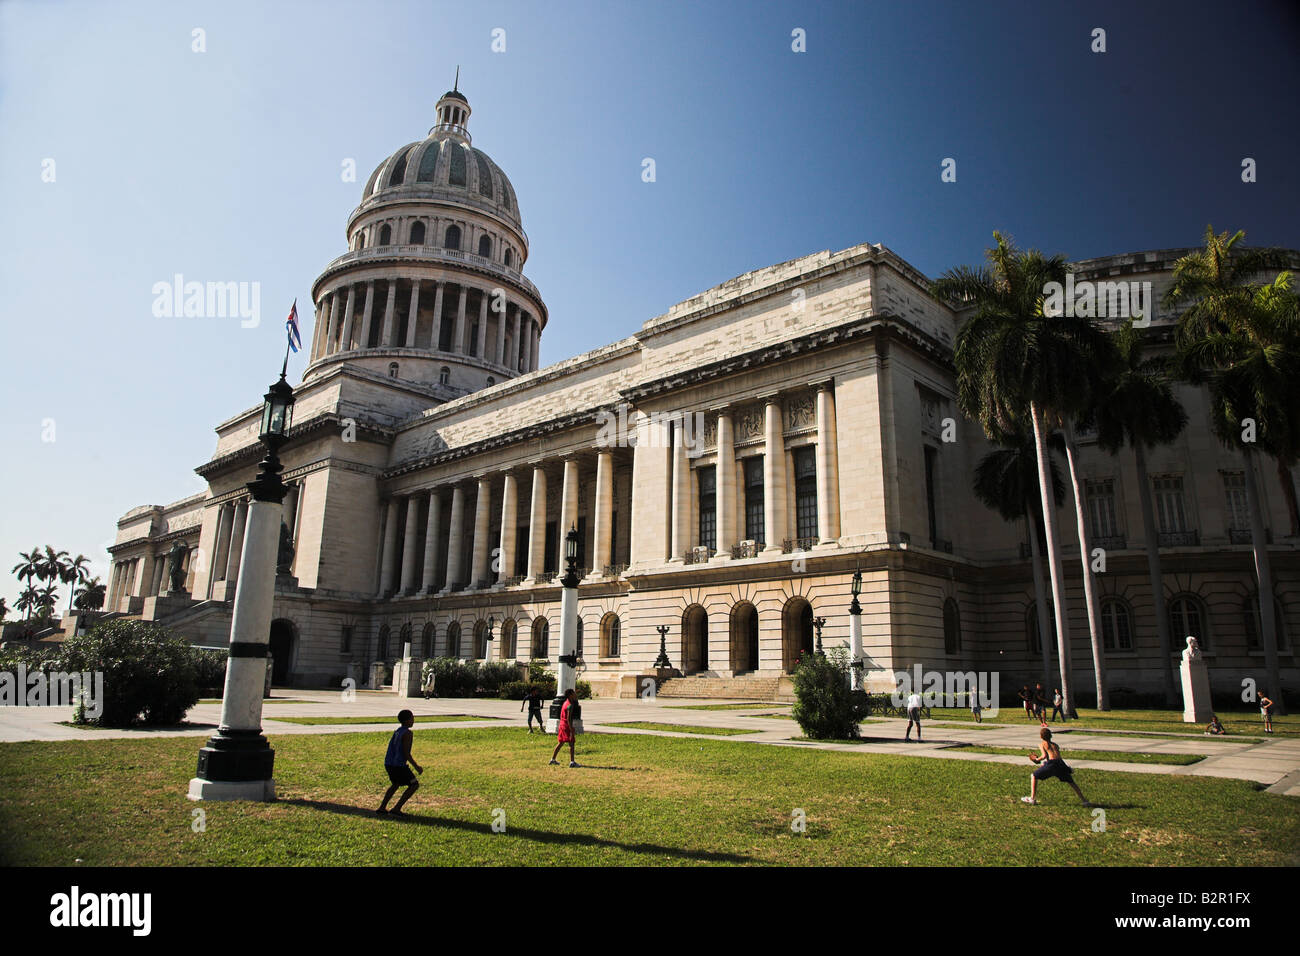 The Capitolio goverment building in Havana, Cuba. Stock Photo